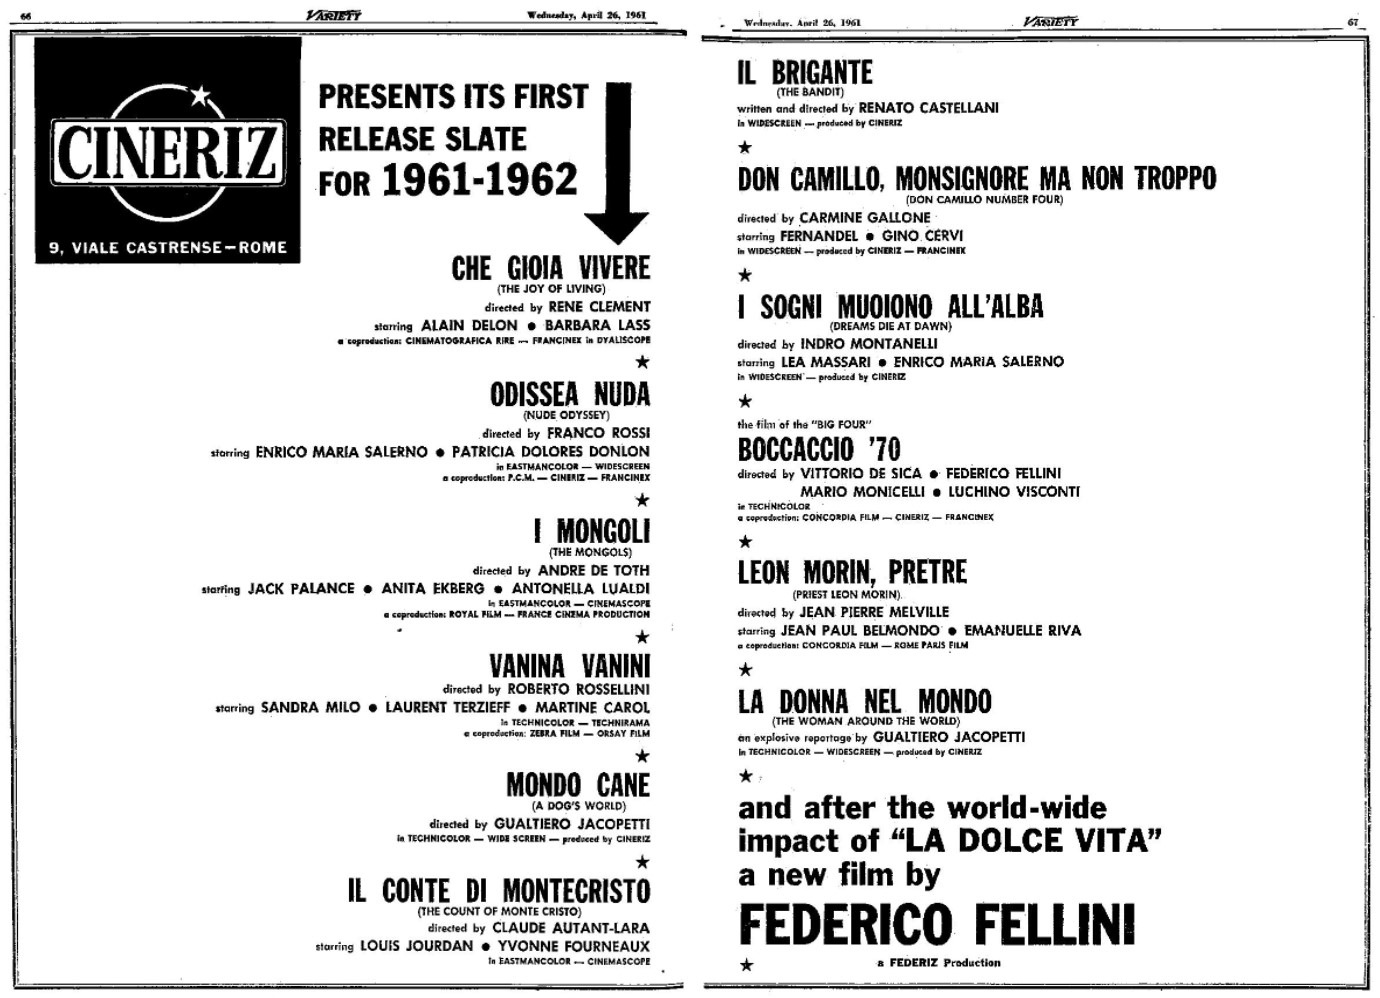 Cineritz film promotion on Variety (26 April 1961)